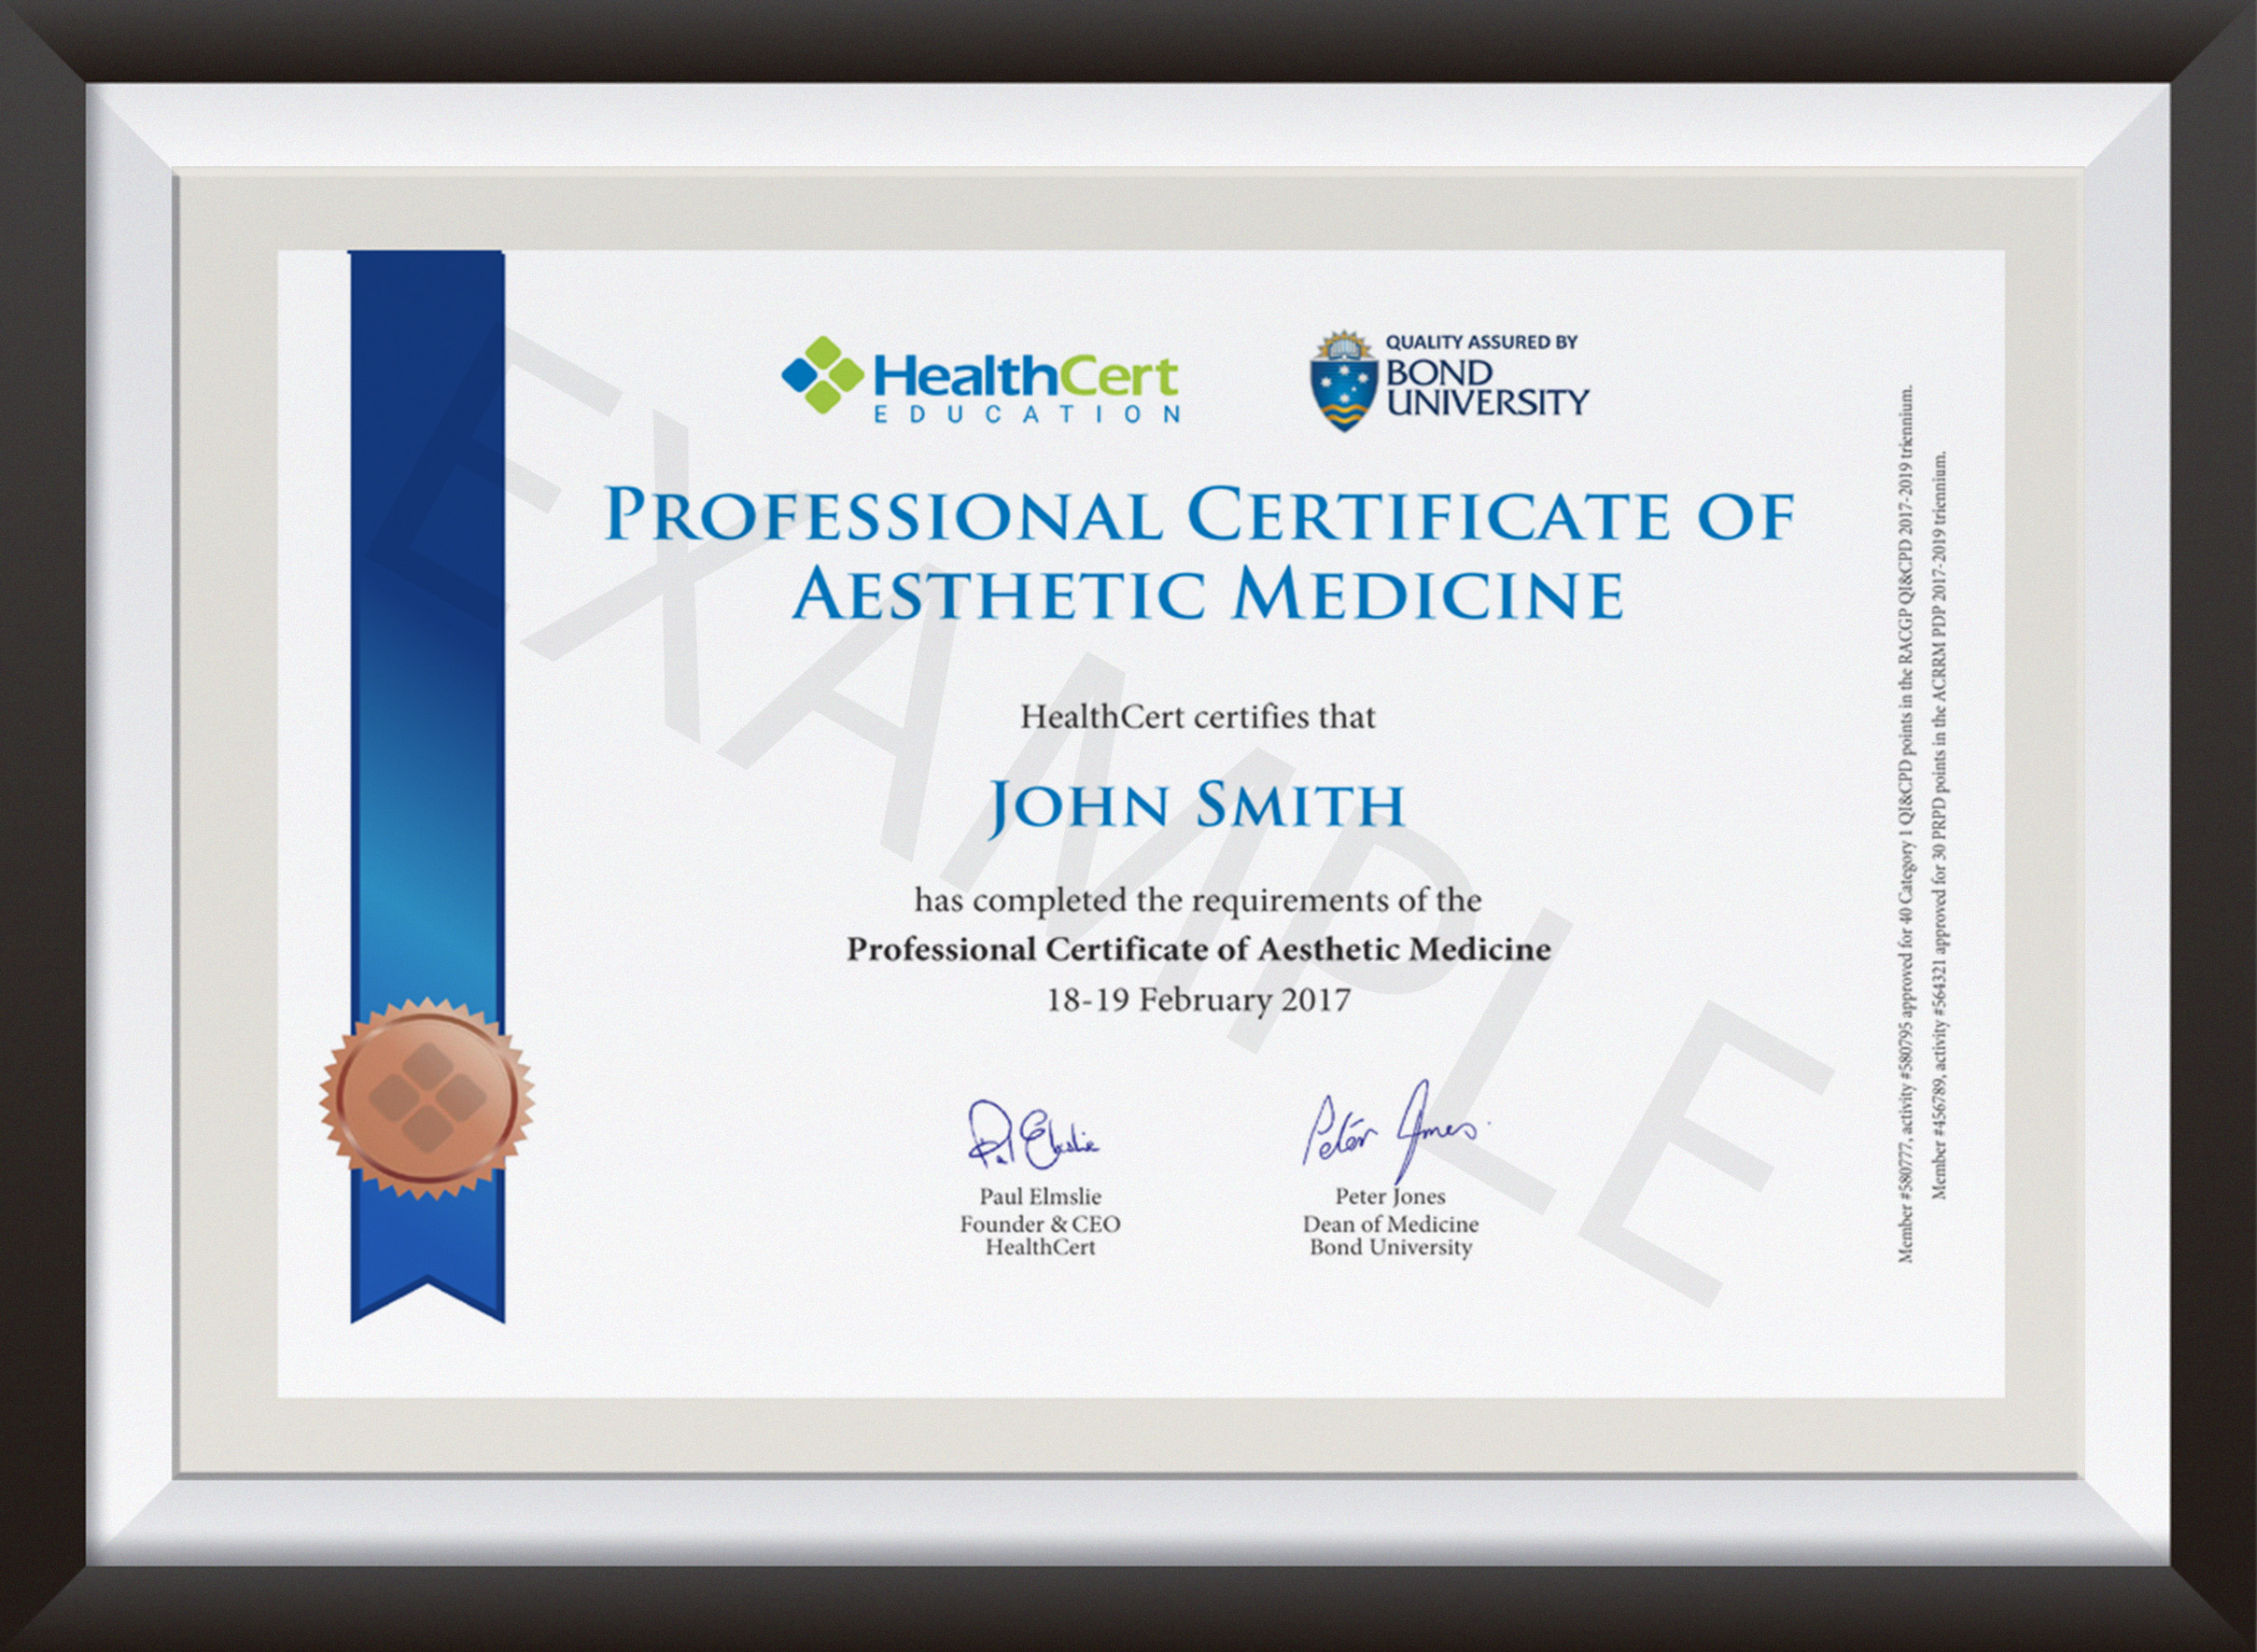 7. Professional Certificate of Aesthetic Medicine